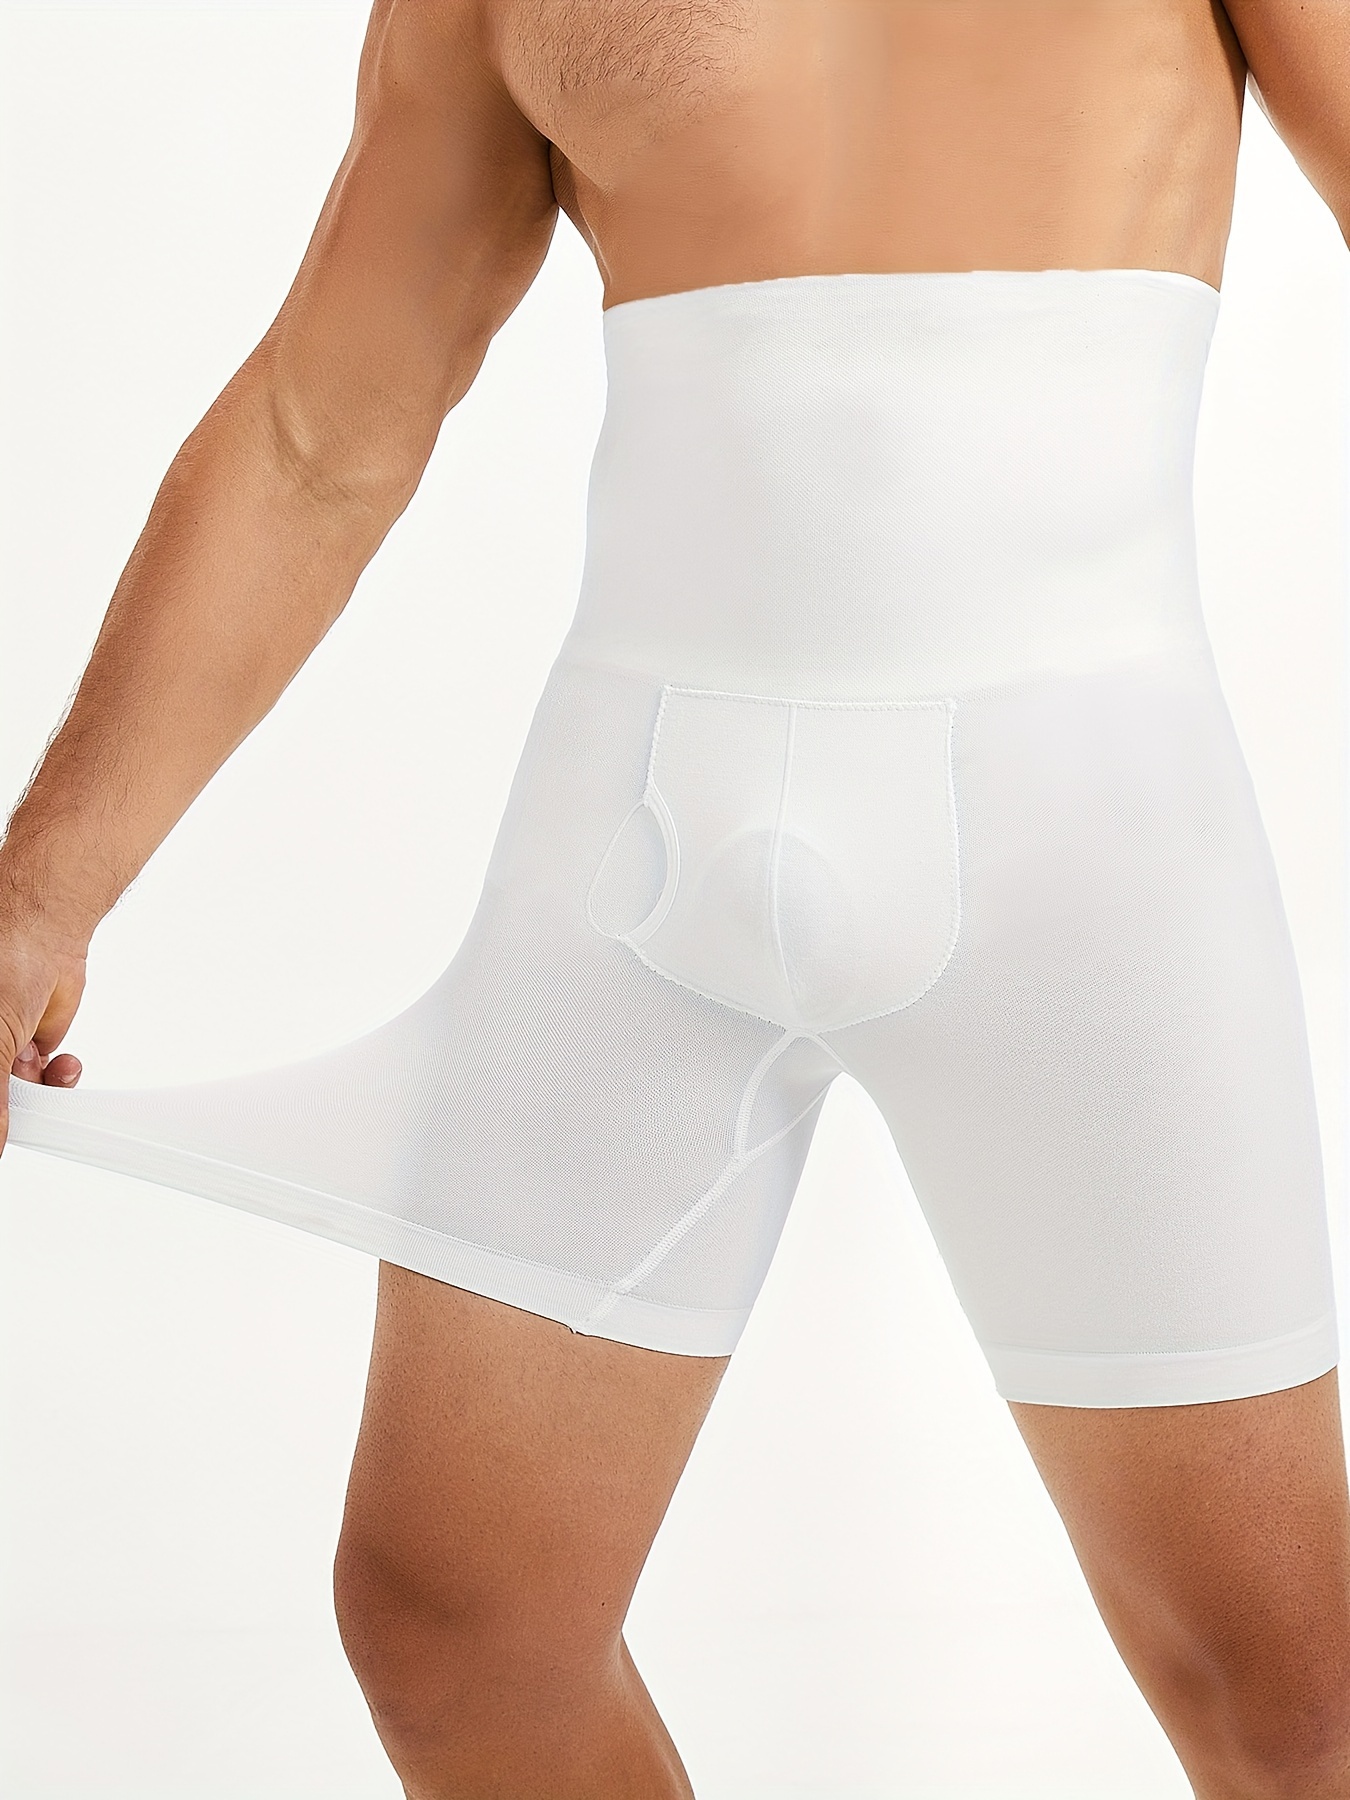 Men Tummy Control Shorts High Waist Slimming Body Shaper